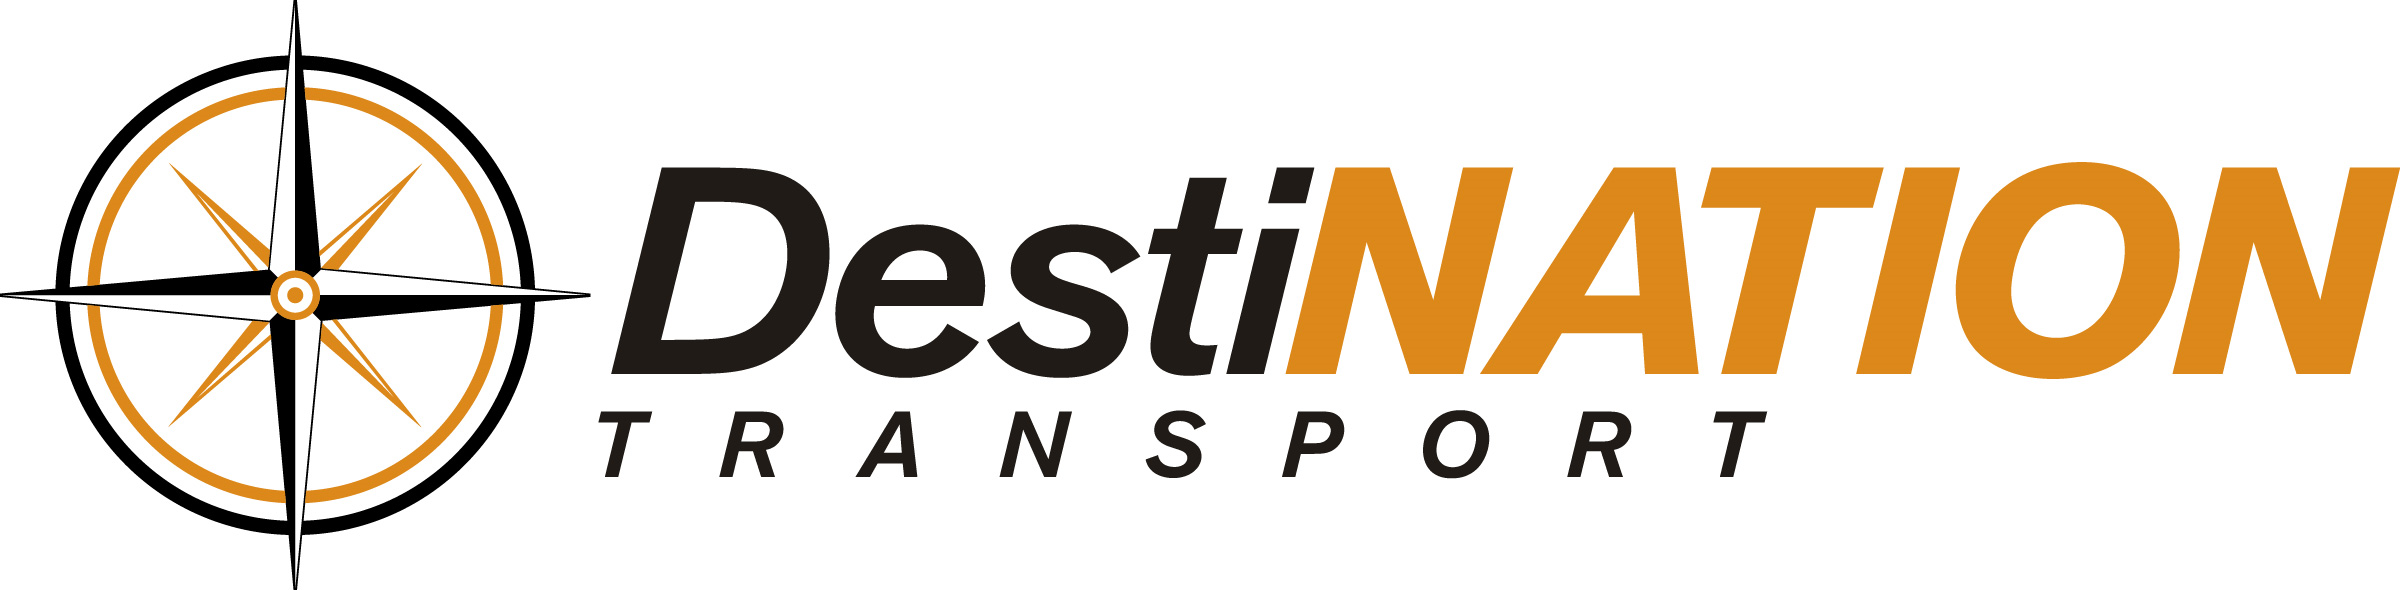 DestiNATION Transport logo